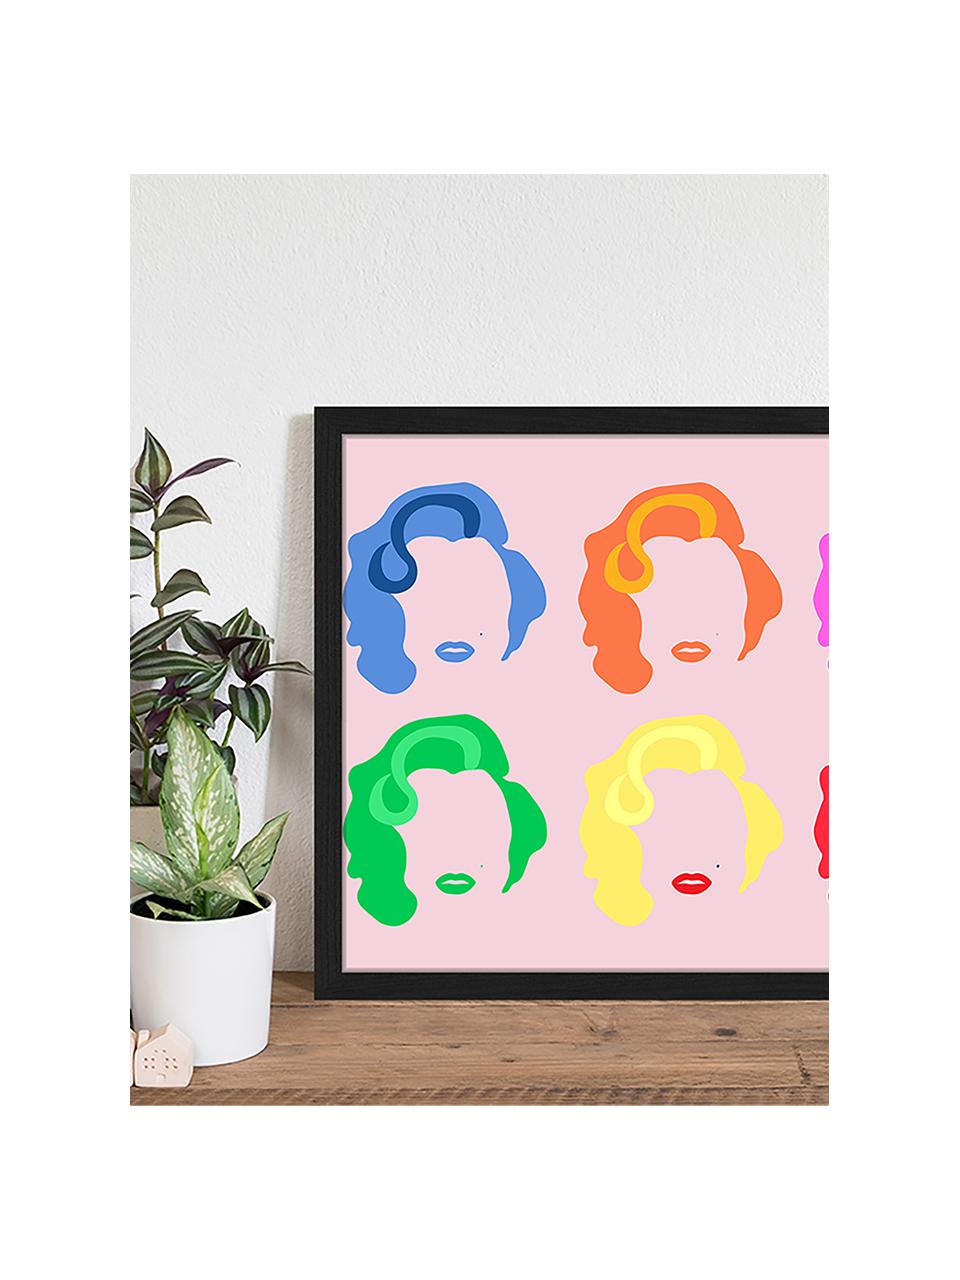 Gerahmter Digitaldruck Marilyn Pop Art, Bild: Digitaldruck auf Papier, , Rahmen: Holz, lackiert, Front: Plexiglas, Mehrfarbig, B 53 x H 43 cm